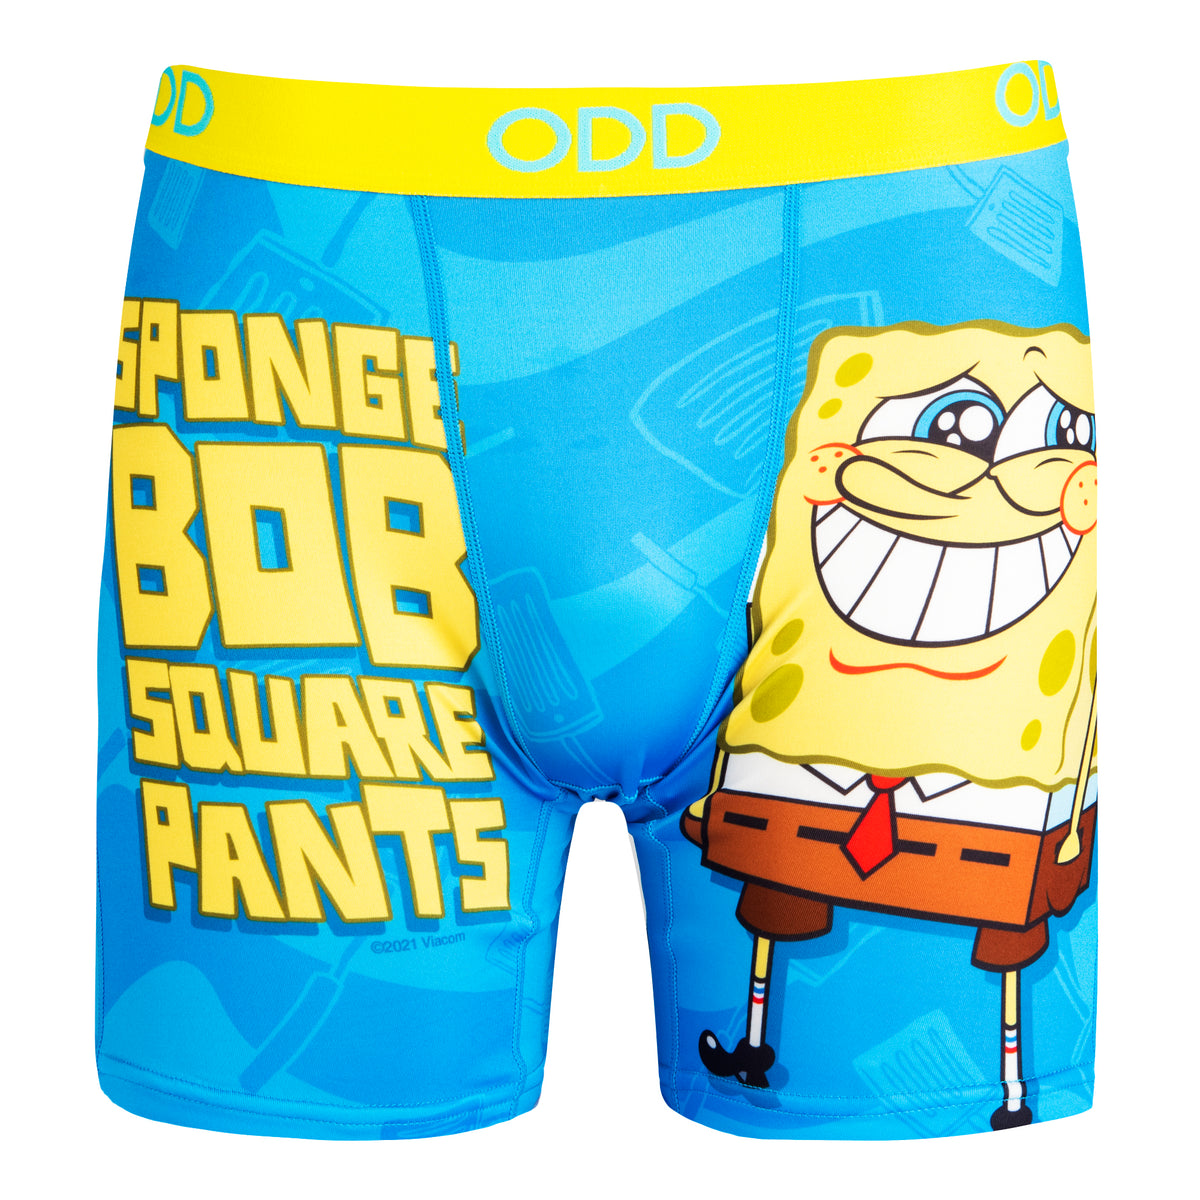 SpongeBob SquarePants Boxer Briefs – Mike's Wild Crazy Socks